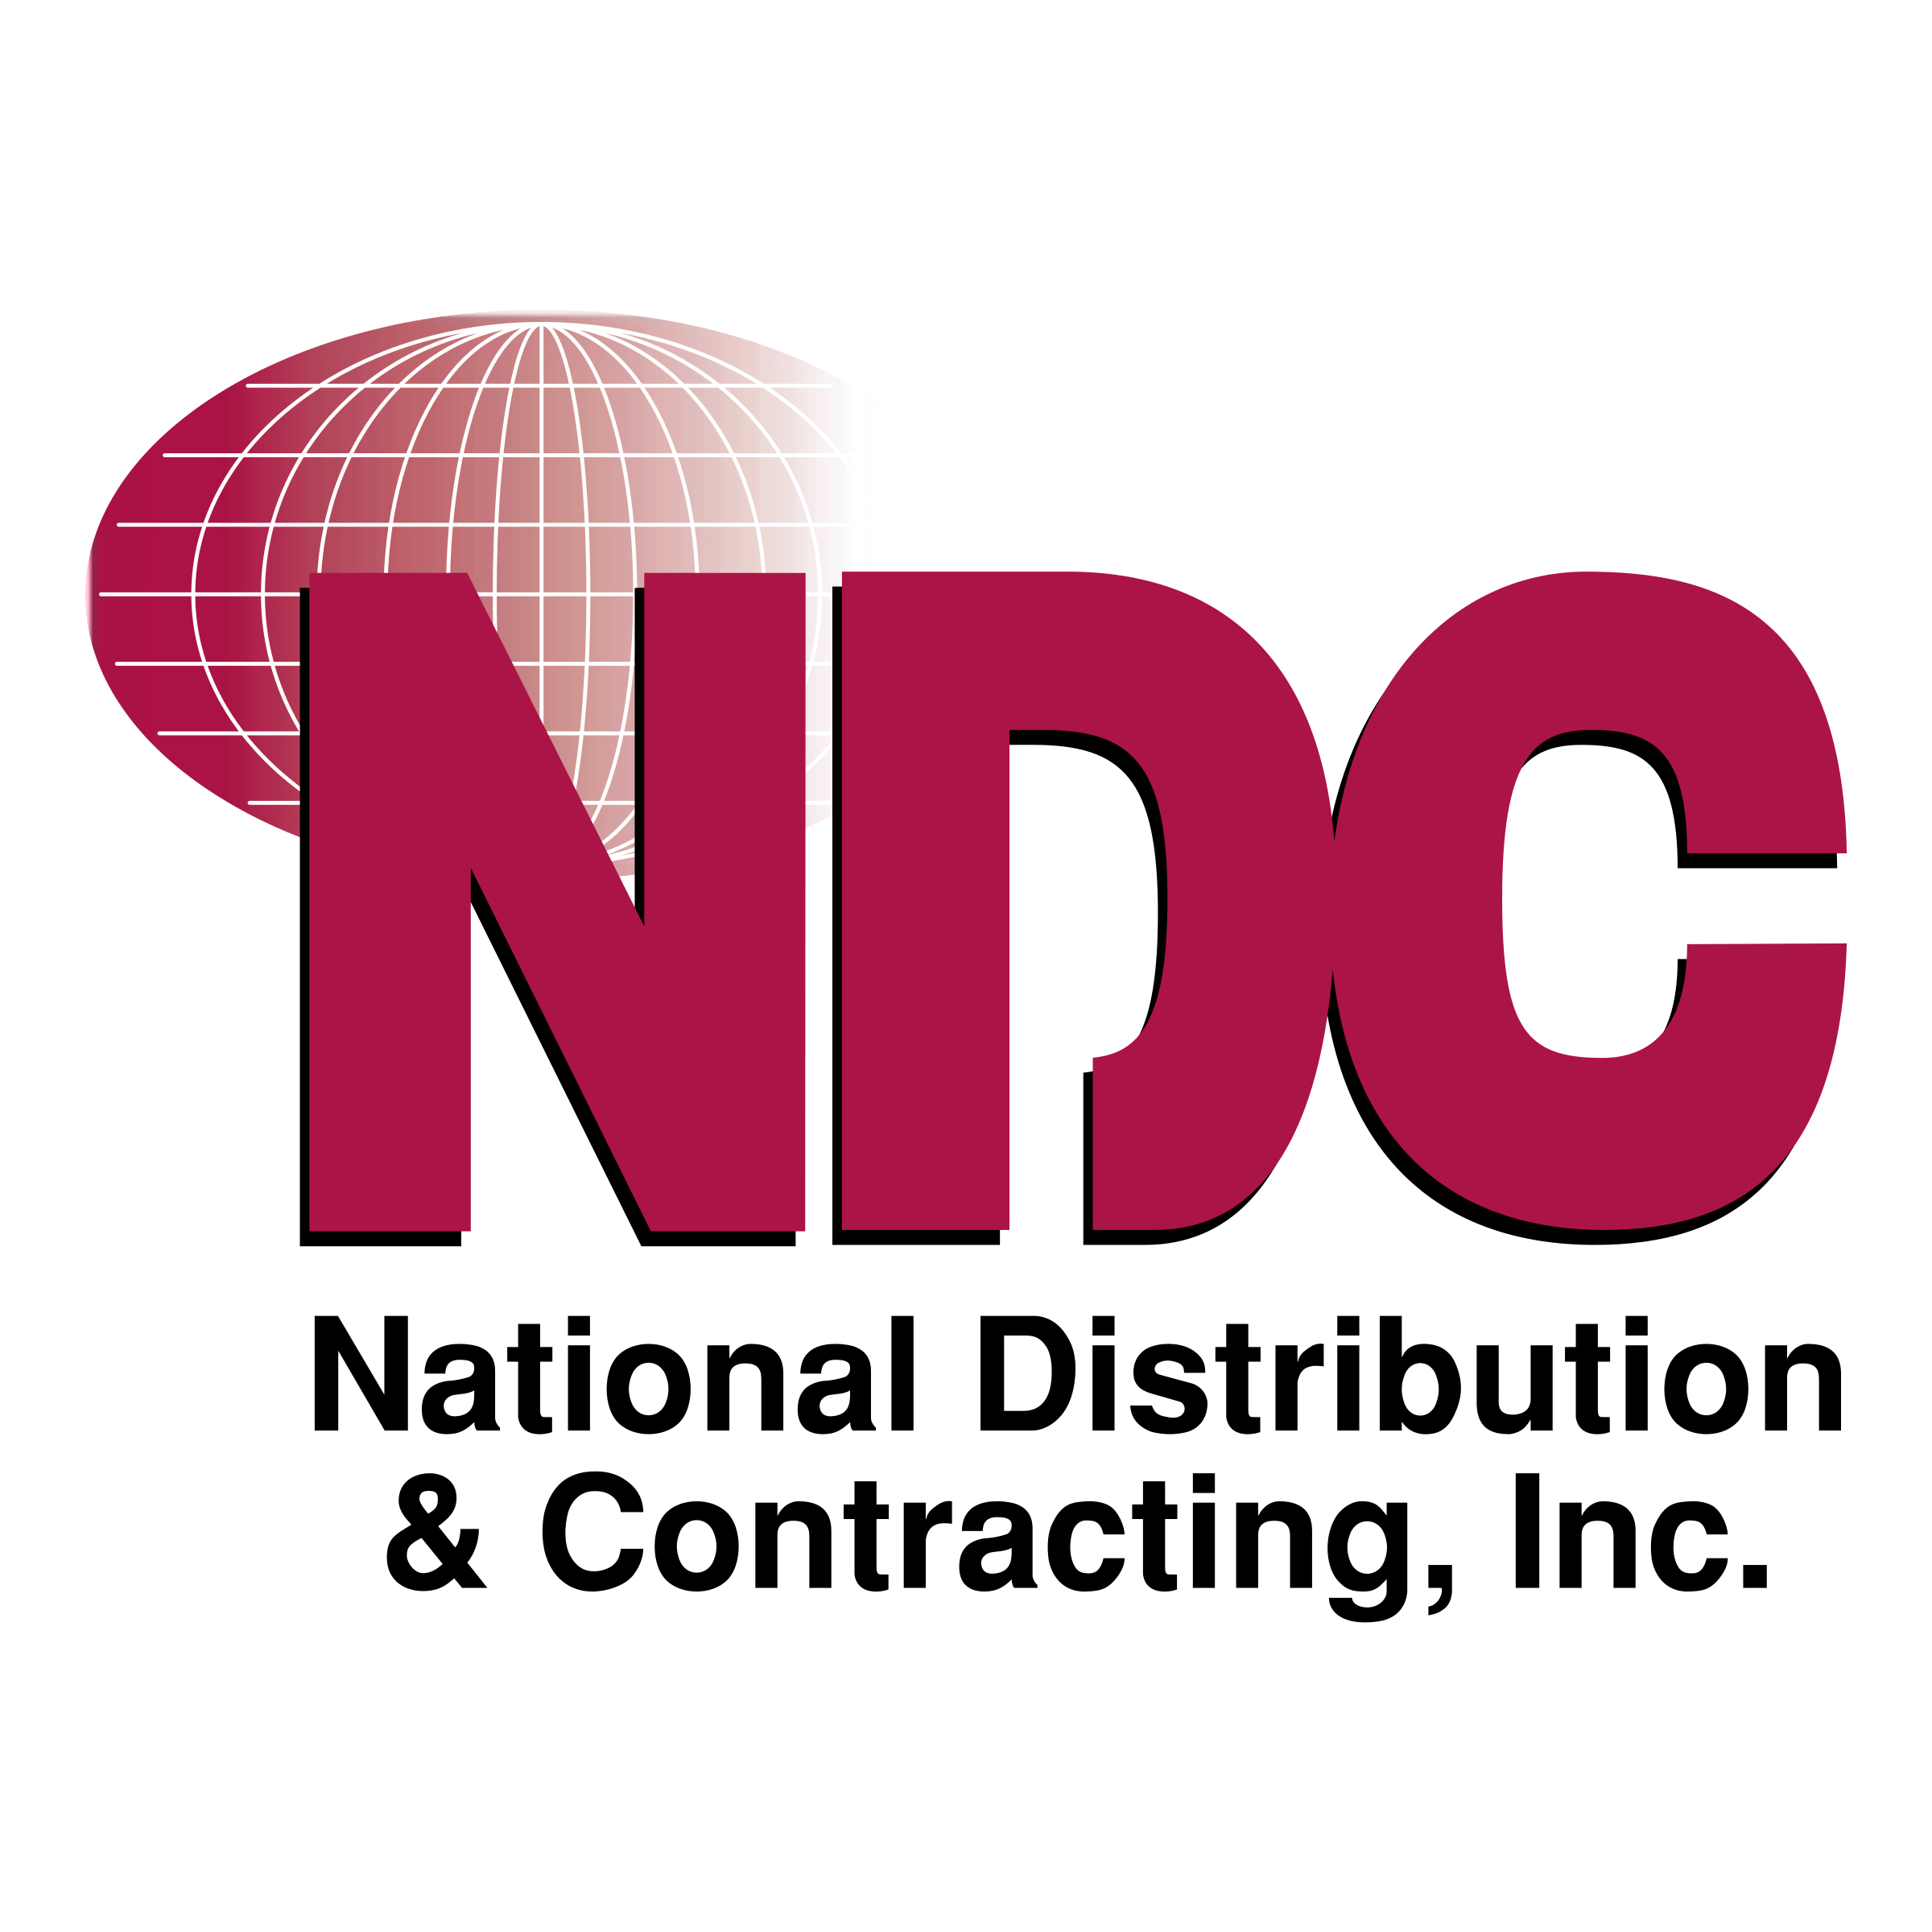 NDC Logo - NDC Logo PNG Transparent & SVG Vector - Freebie Supply